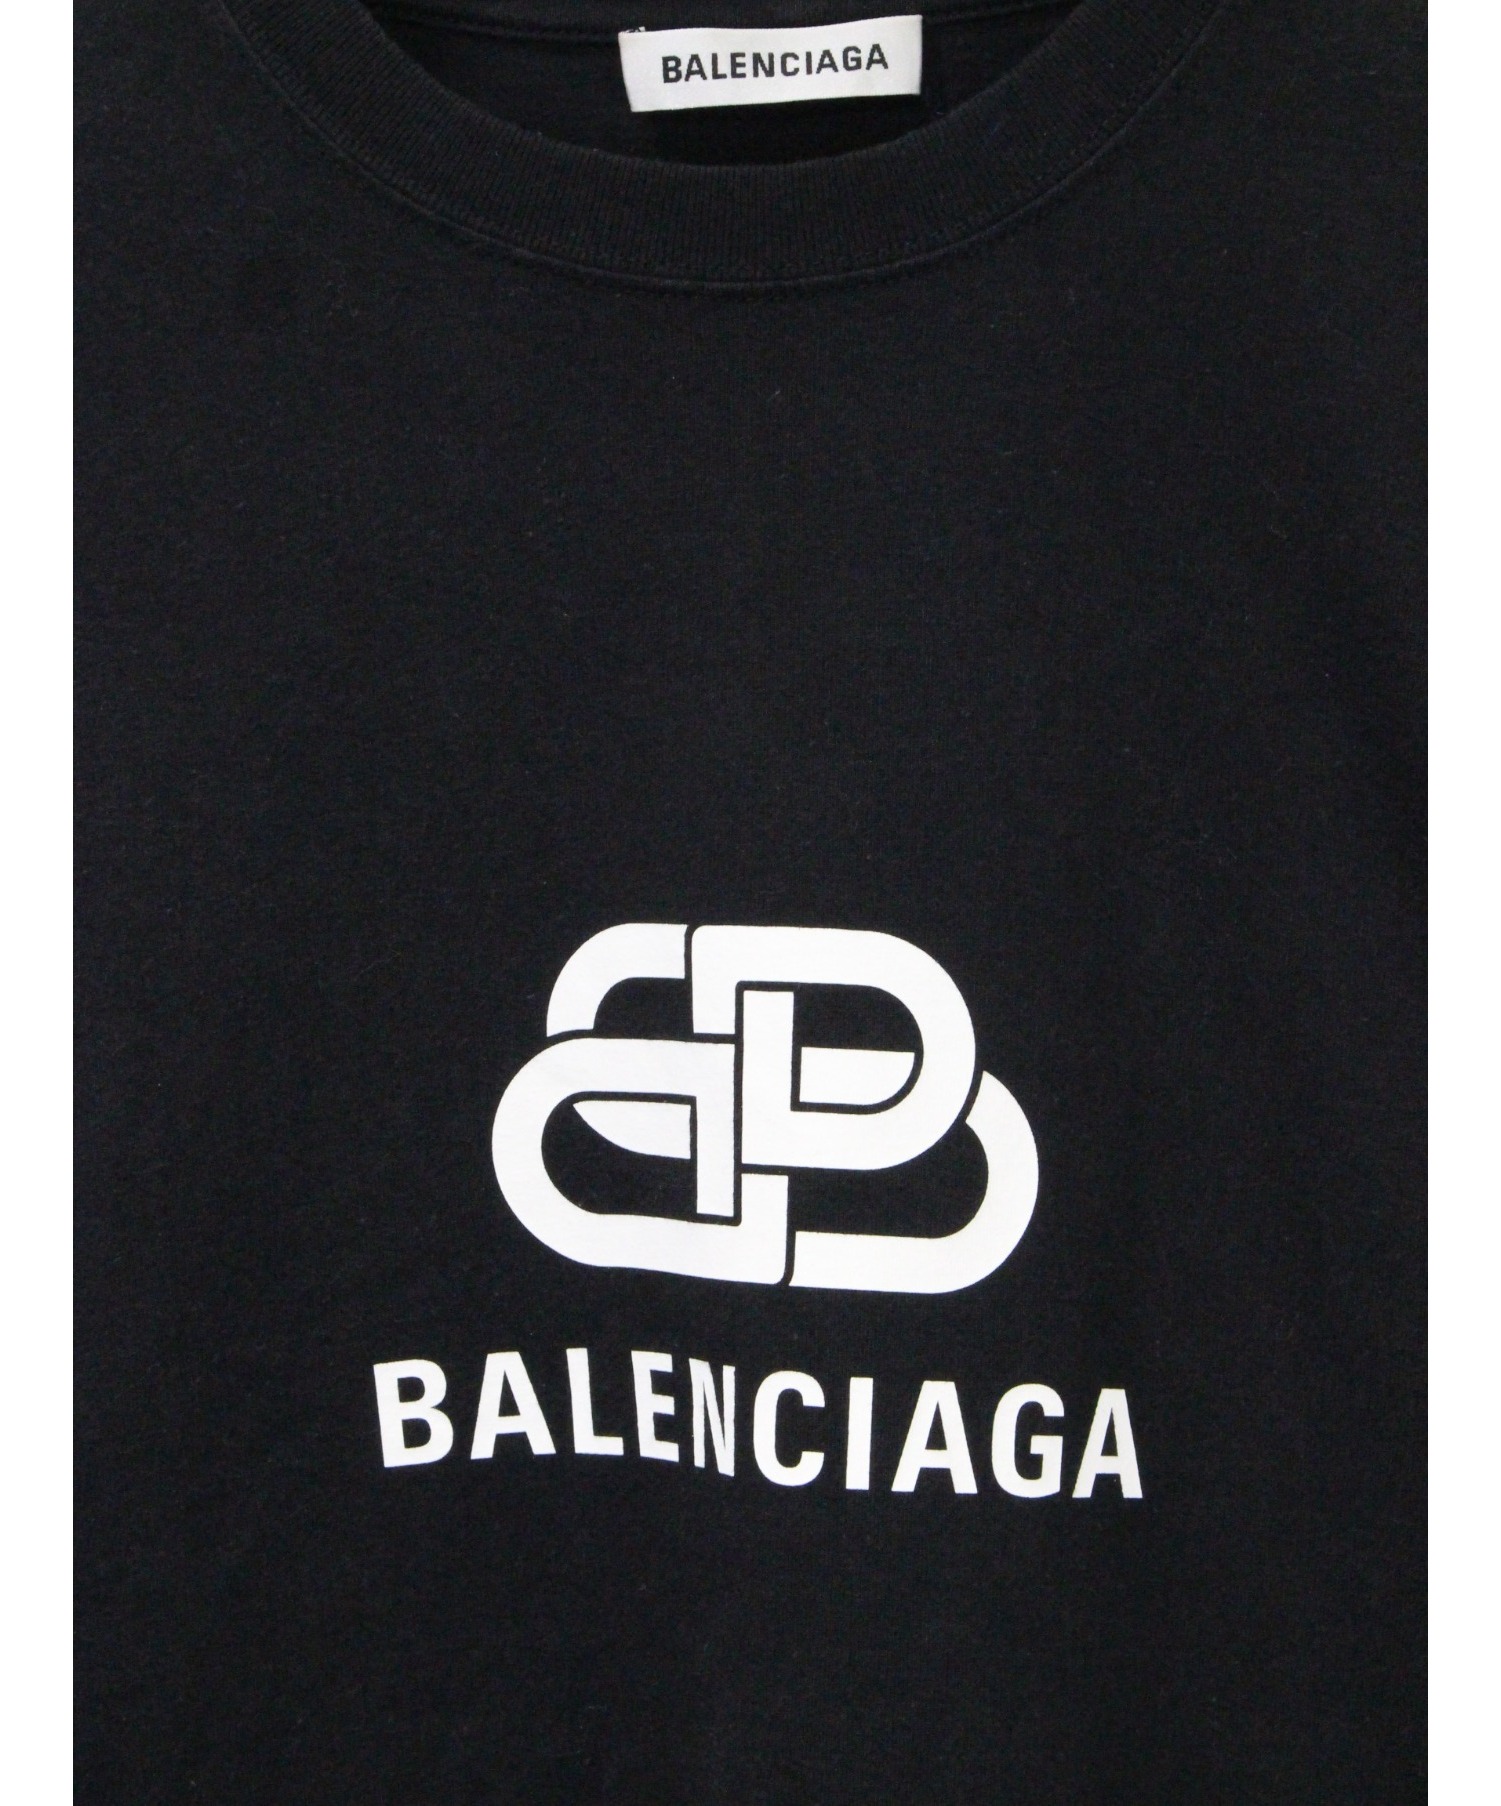 BALENCIAGA (バレンシアガ) オーバーサイズBBロゴTシャツ ブラック サイズ:XS